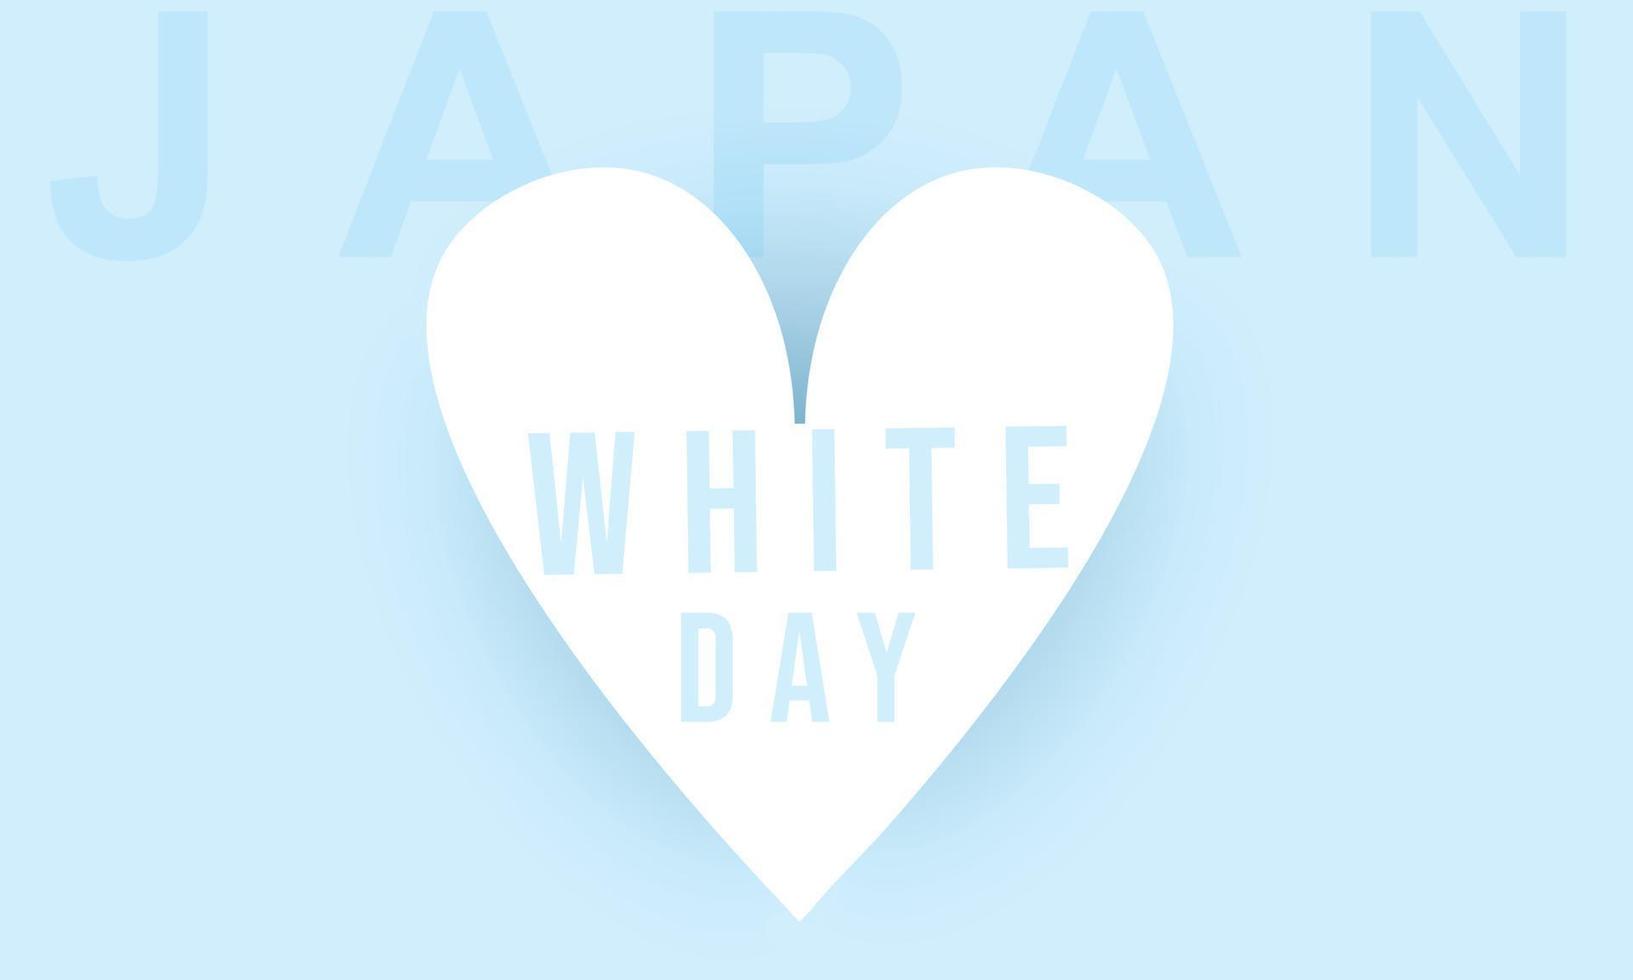 glücklich Weiß Tag Banner Vektor Illustration. Japan